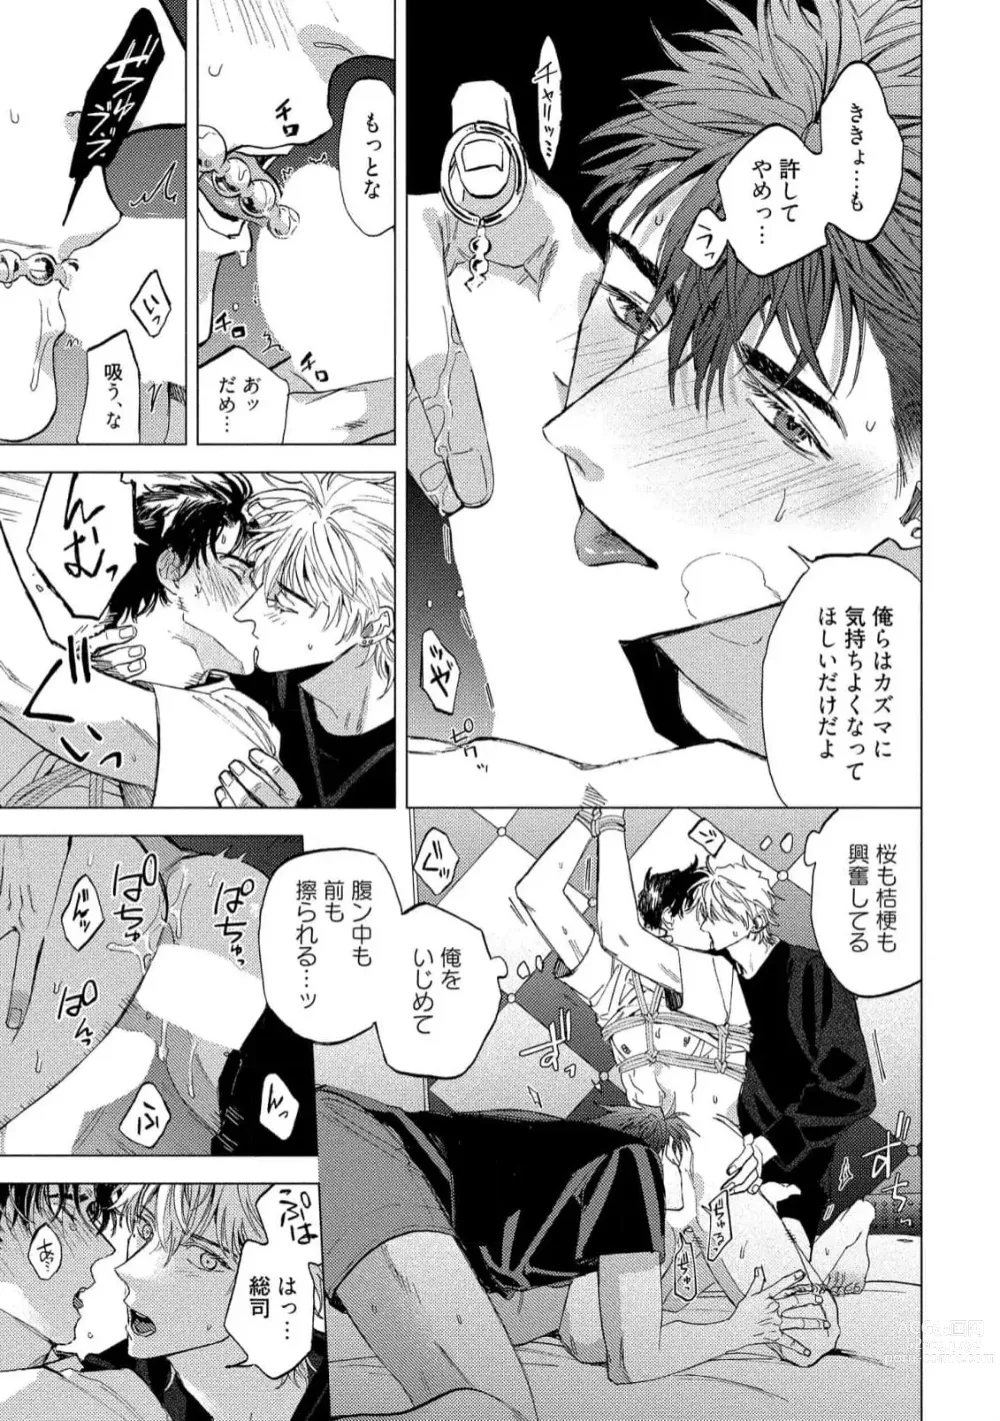 Page 153 of manga Fukushuu ga Tokenai